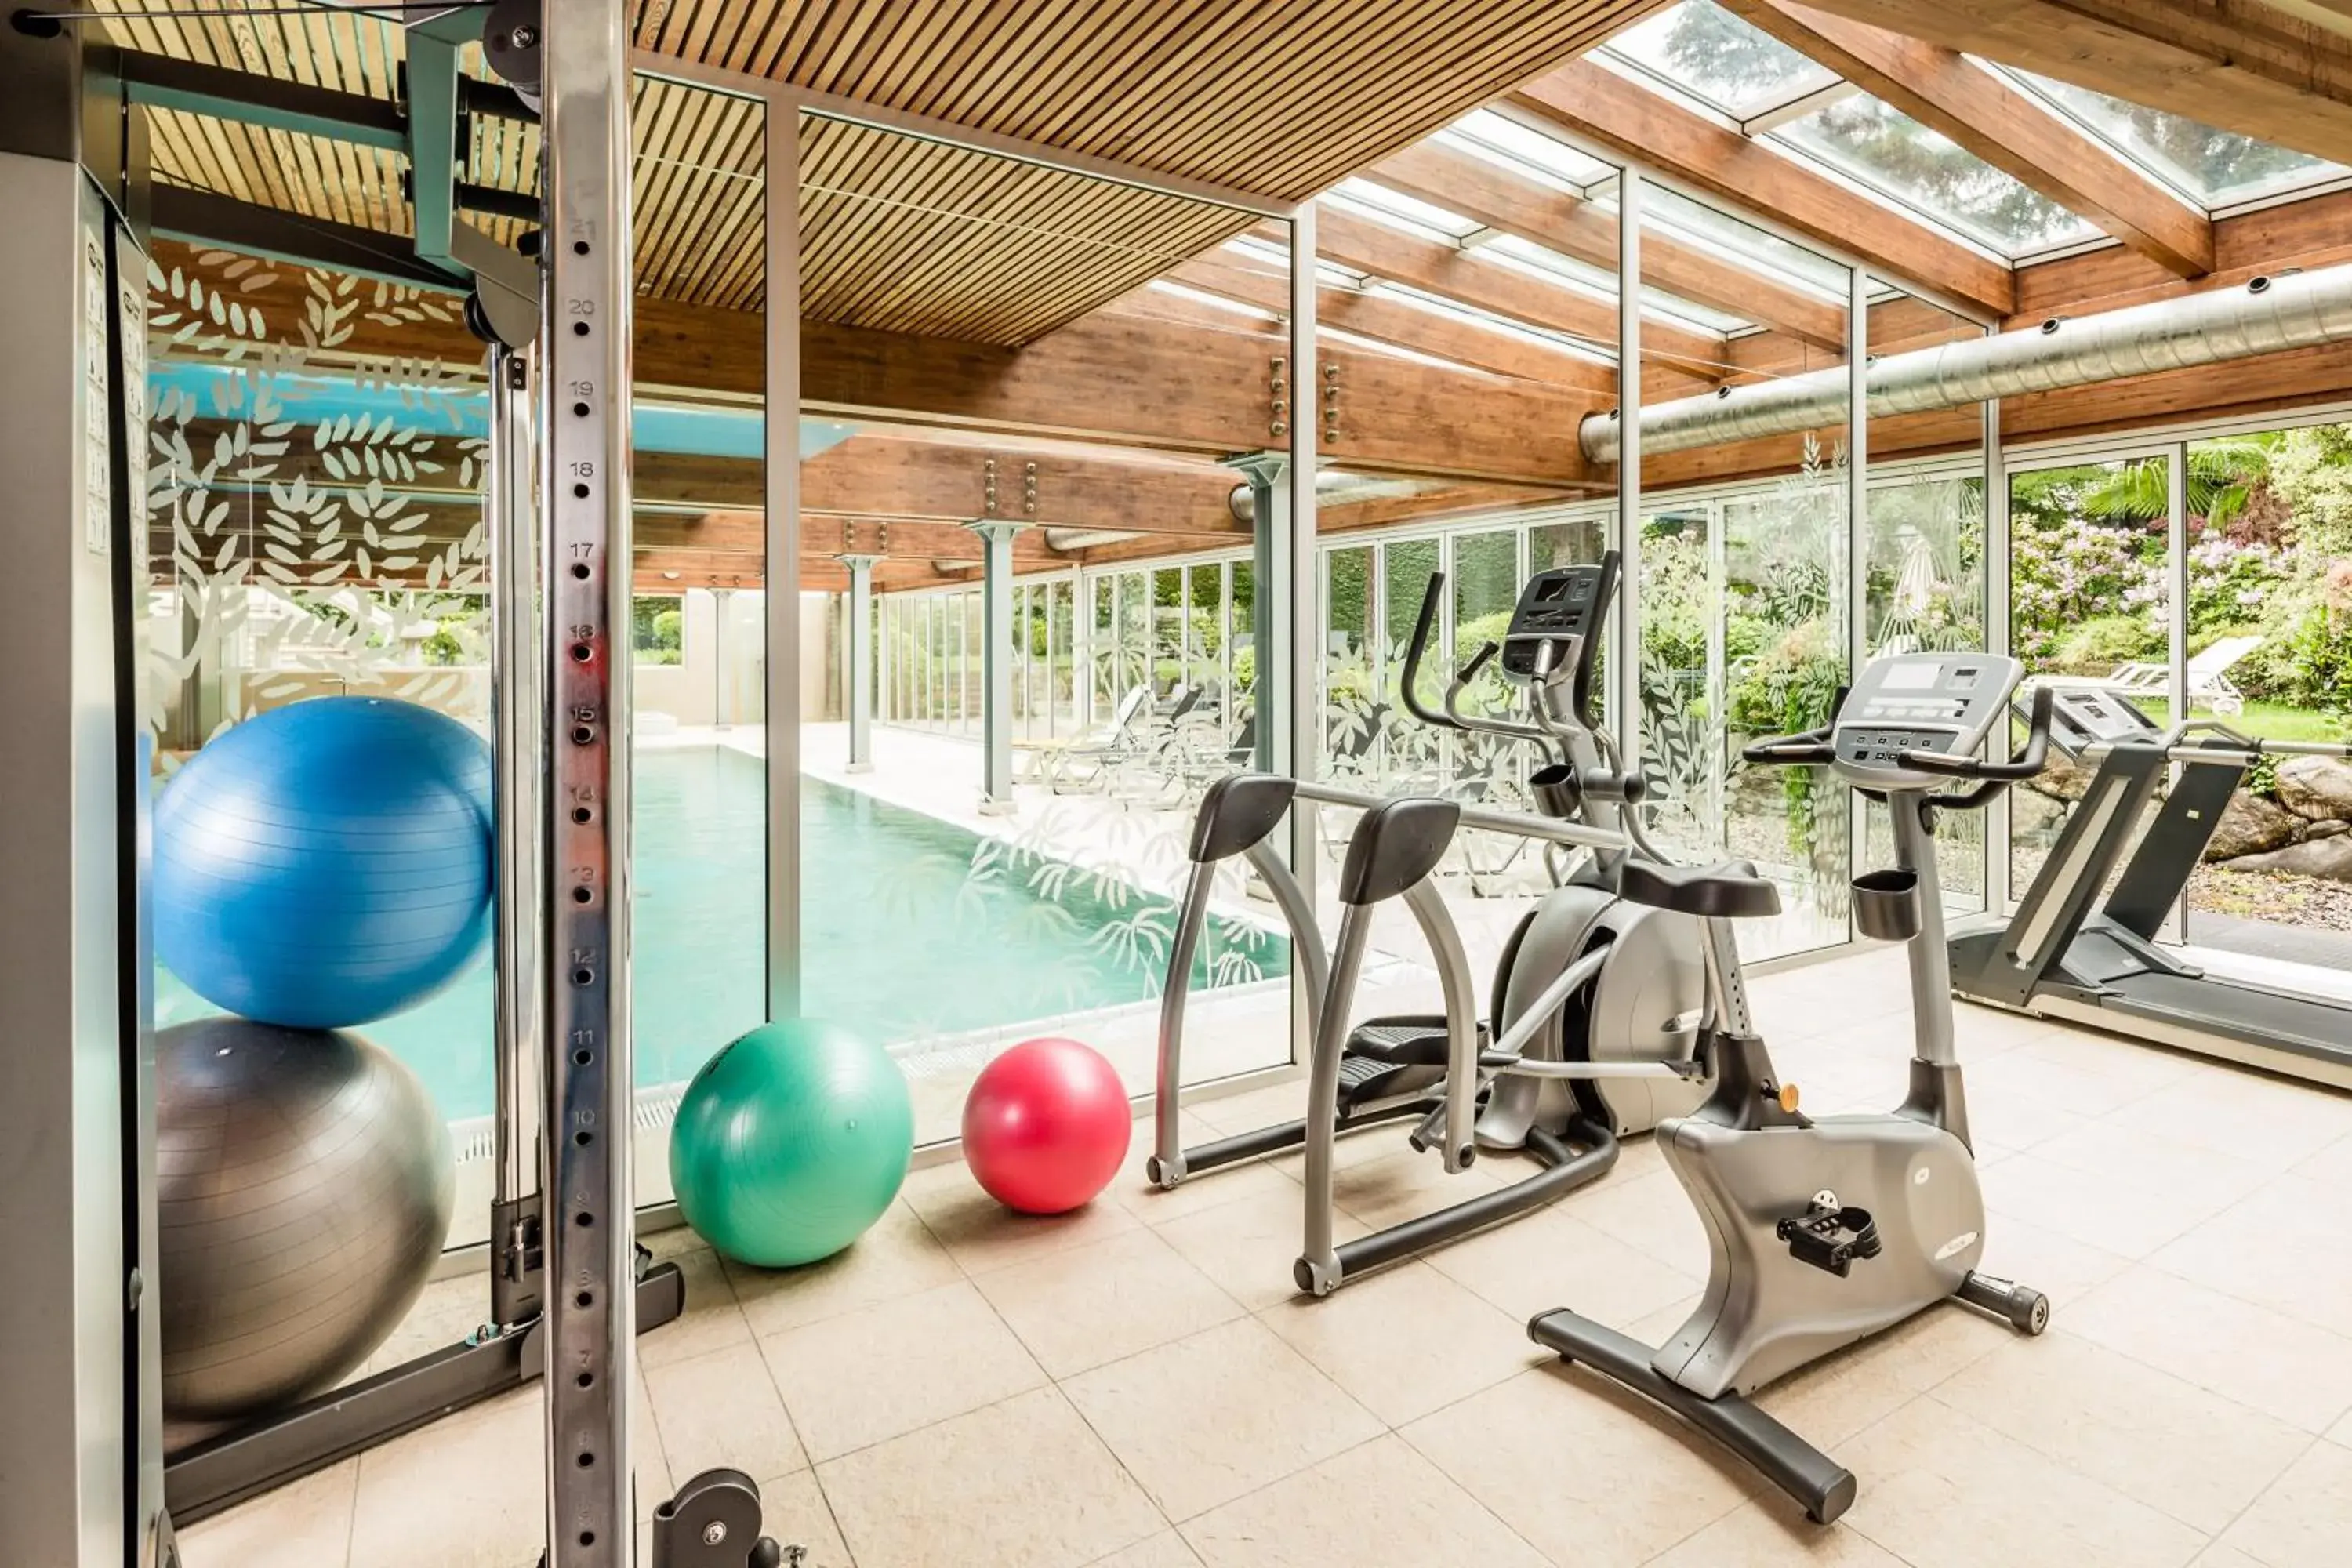 Fitness centre/facilities, Fitness Center/Facilities in Meranerhof